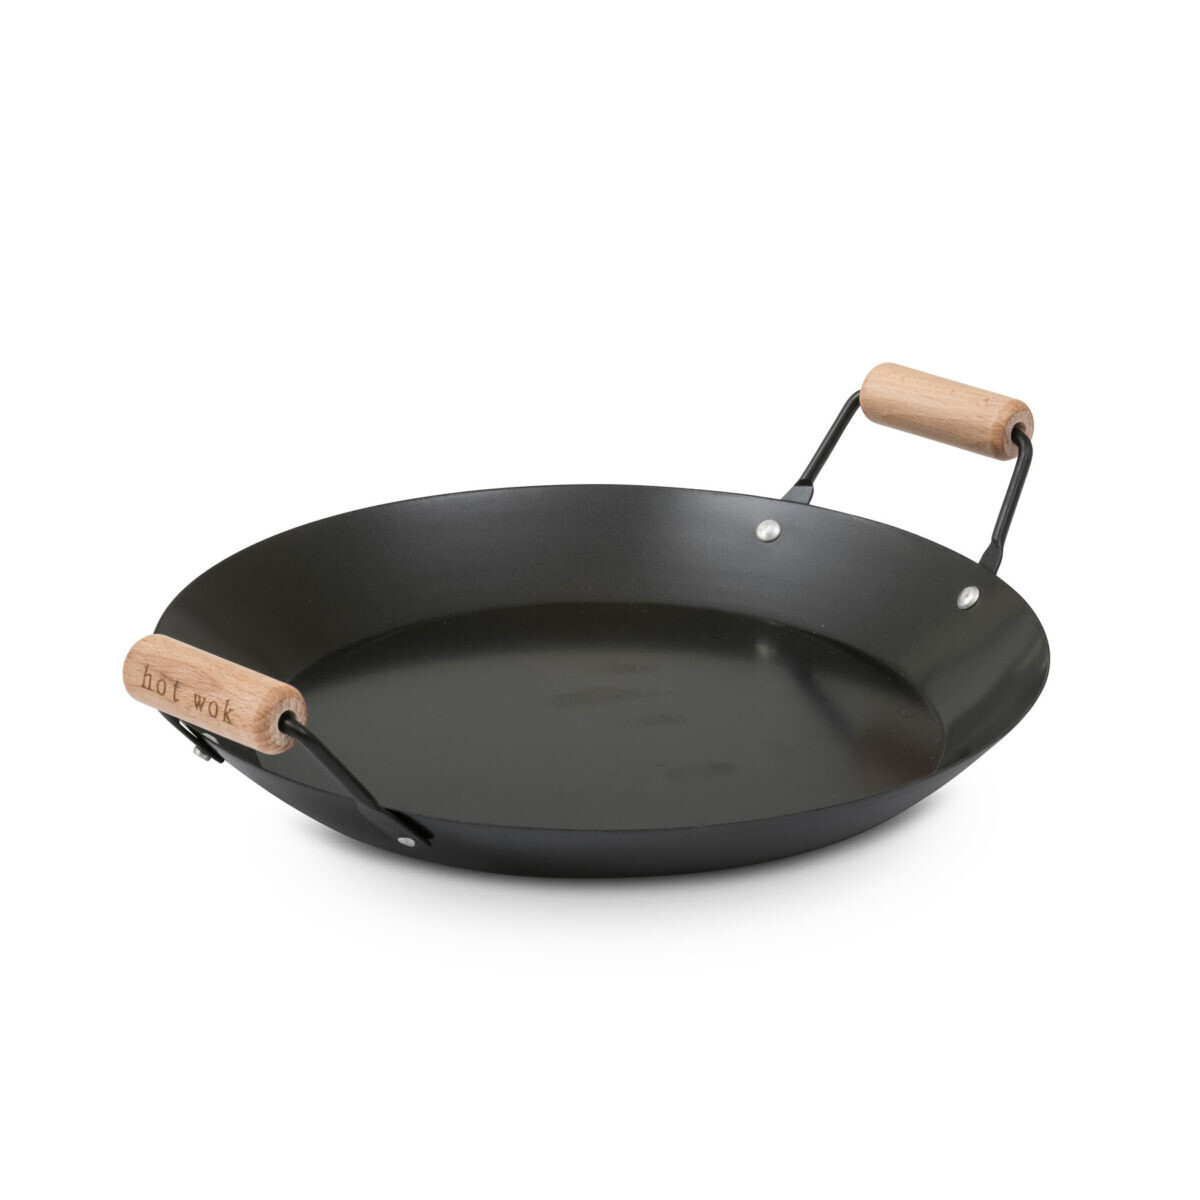 Hot-wok paella pan